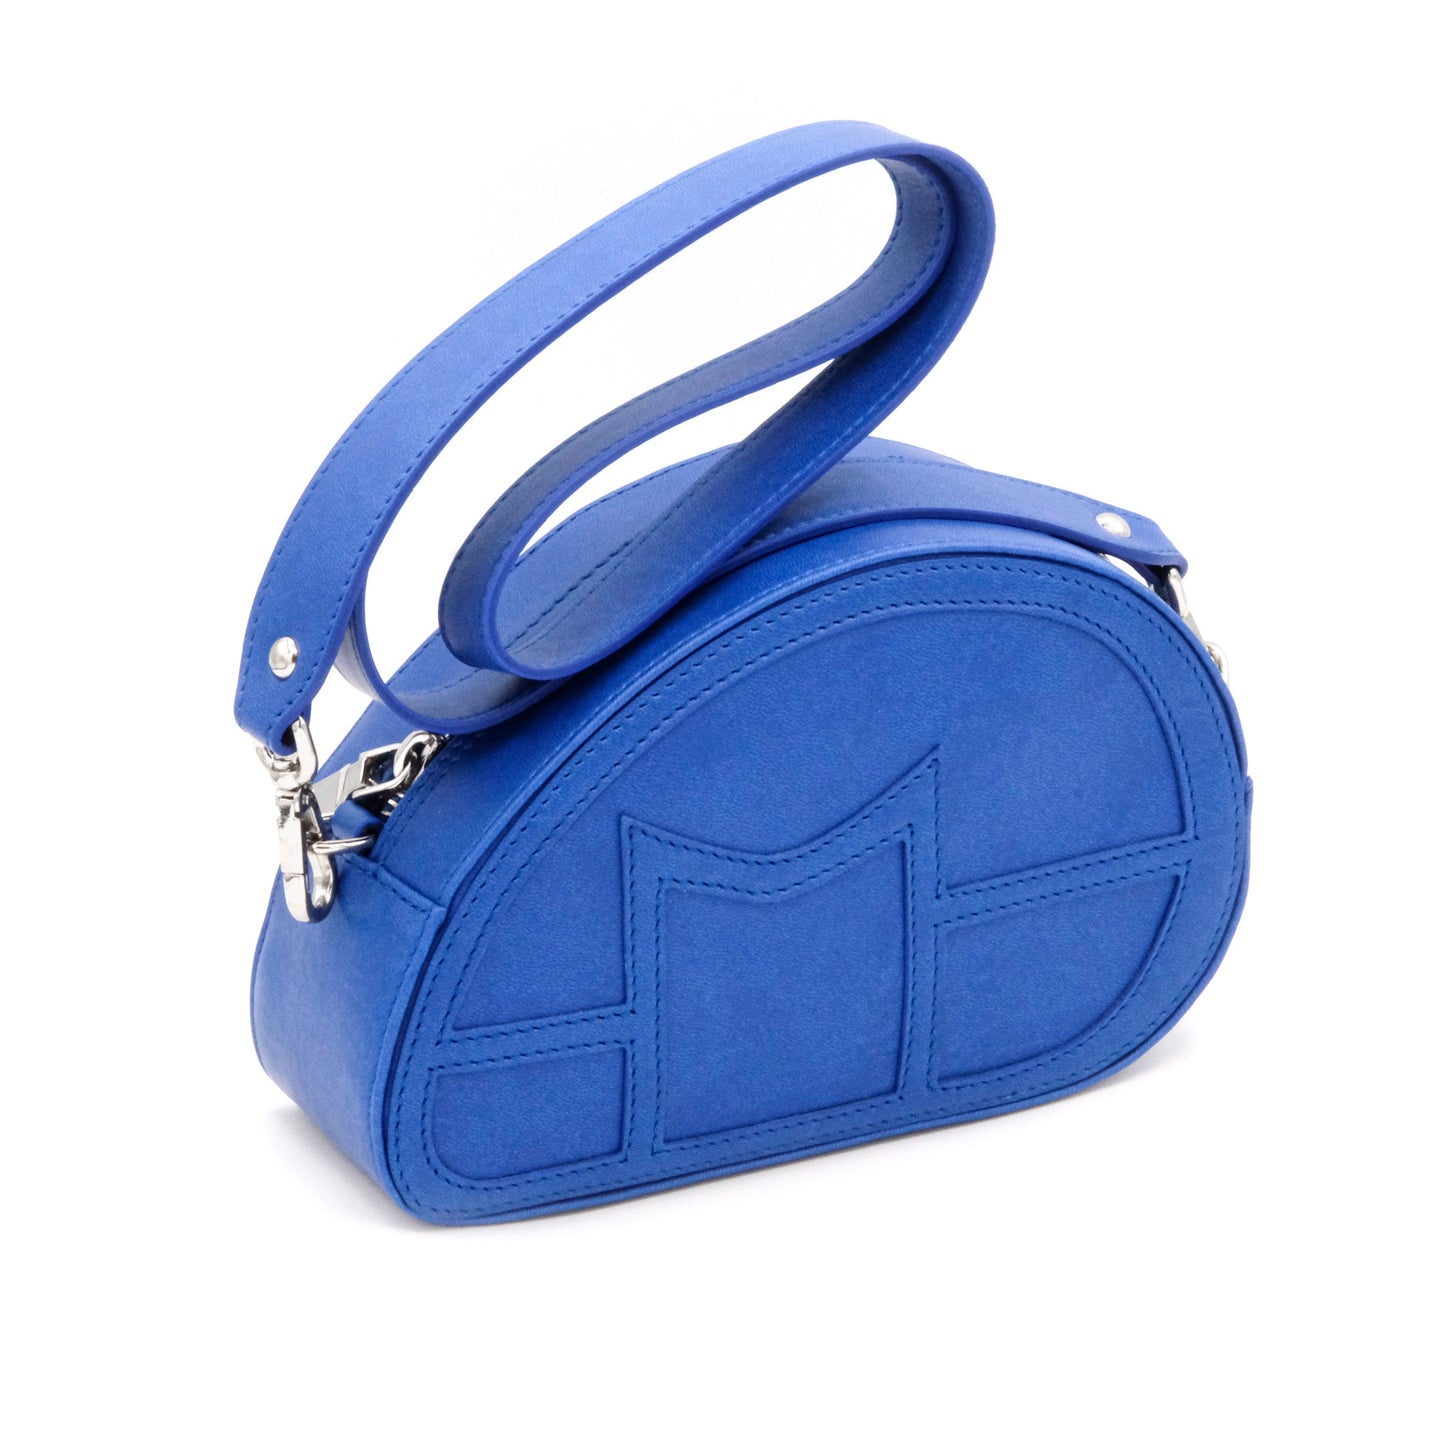 AMA Small bag electric blue